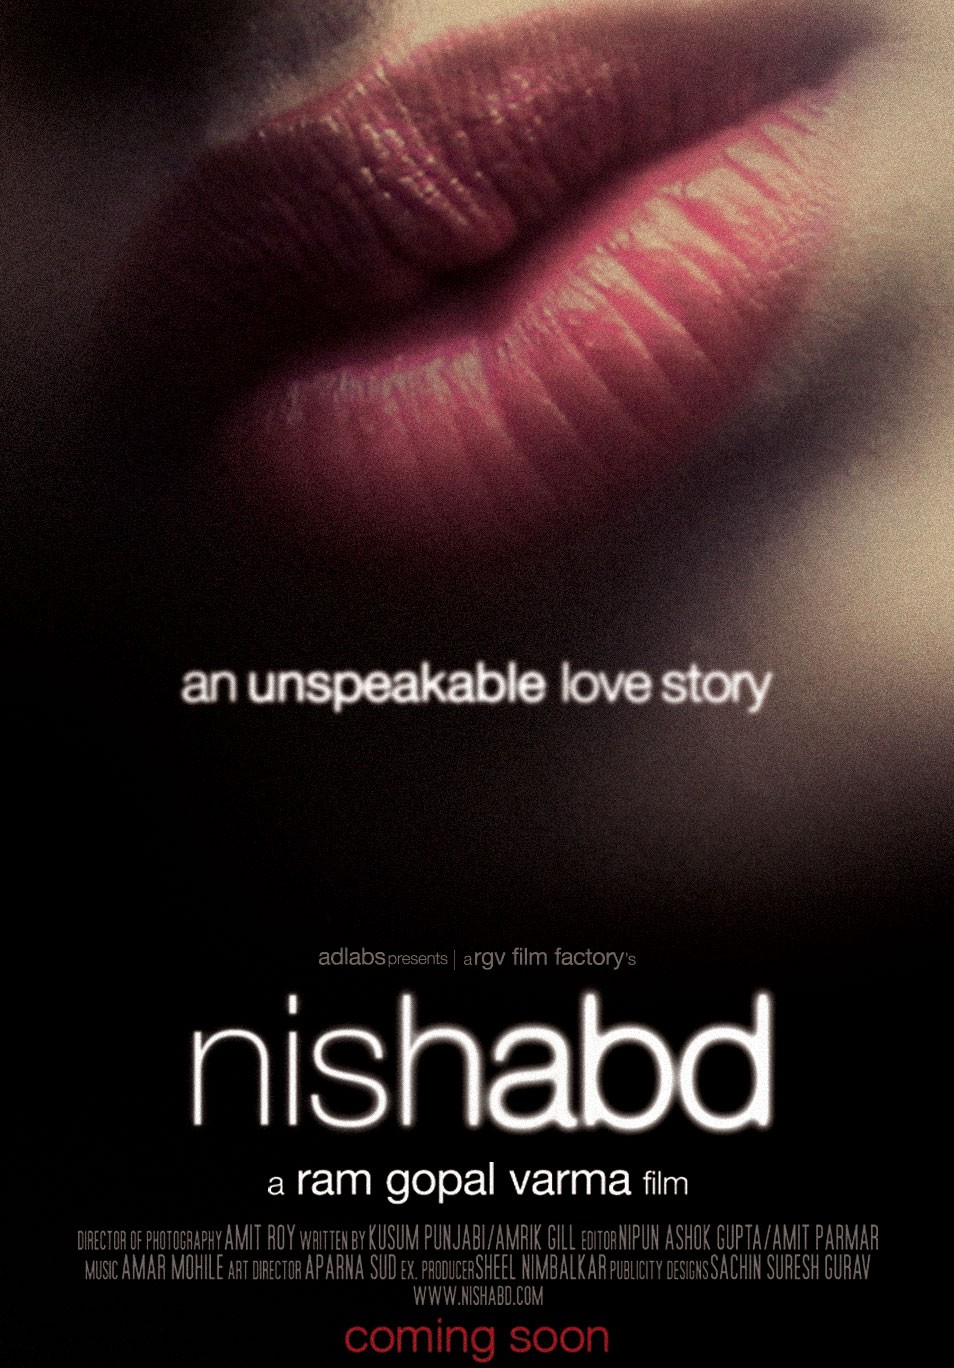 Extra Large Movie Poster Image for Nishabd (#13 of 17)